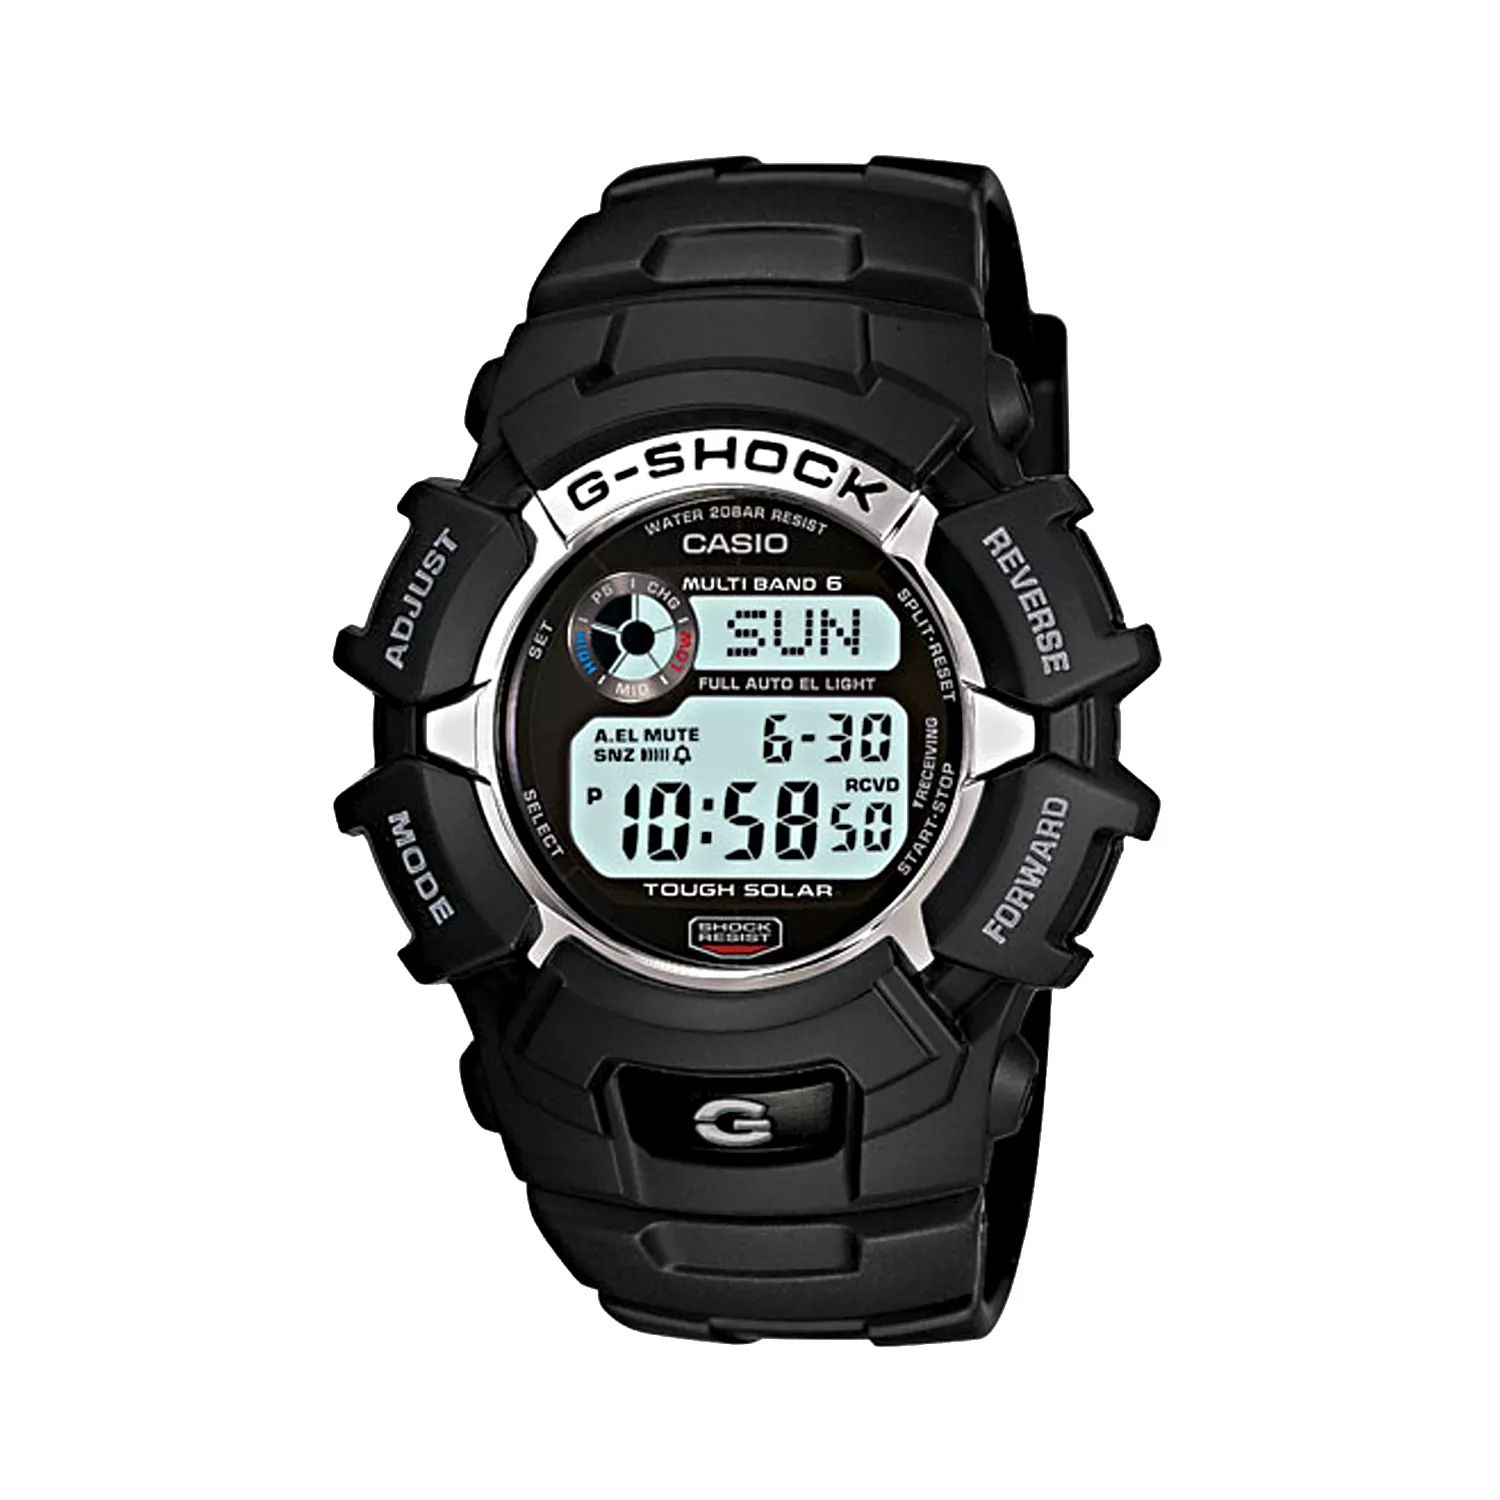 Мужские часы Casio G-Shock Tough Solar с цифровым атомным хронографом - GW2310-1K Relic by Fossil